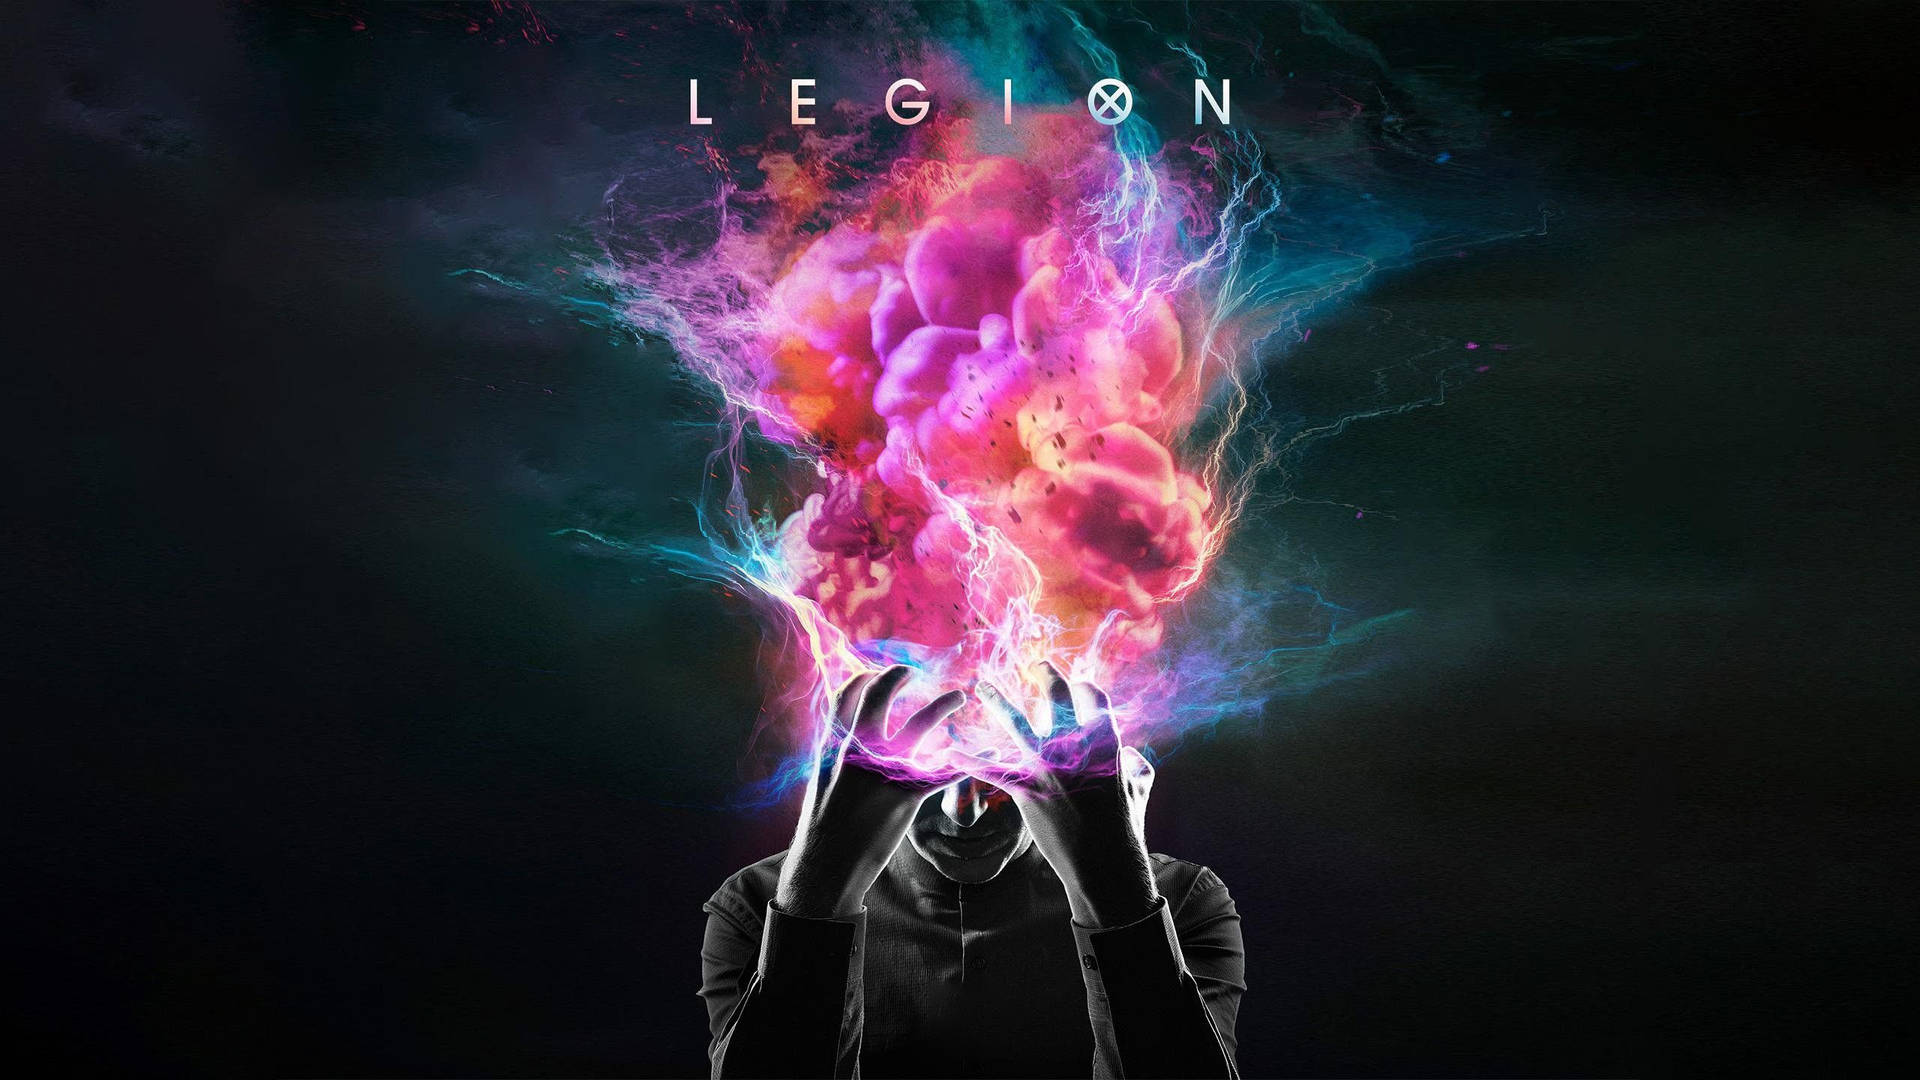 Legion Abstract Head Explosion 1440p Gaming Wallpaper